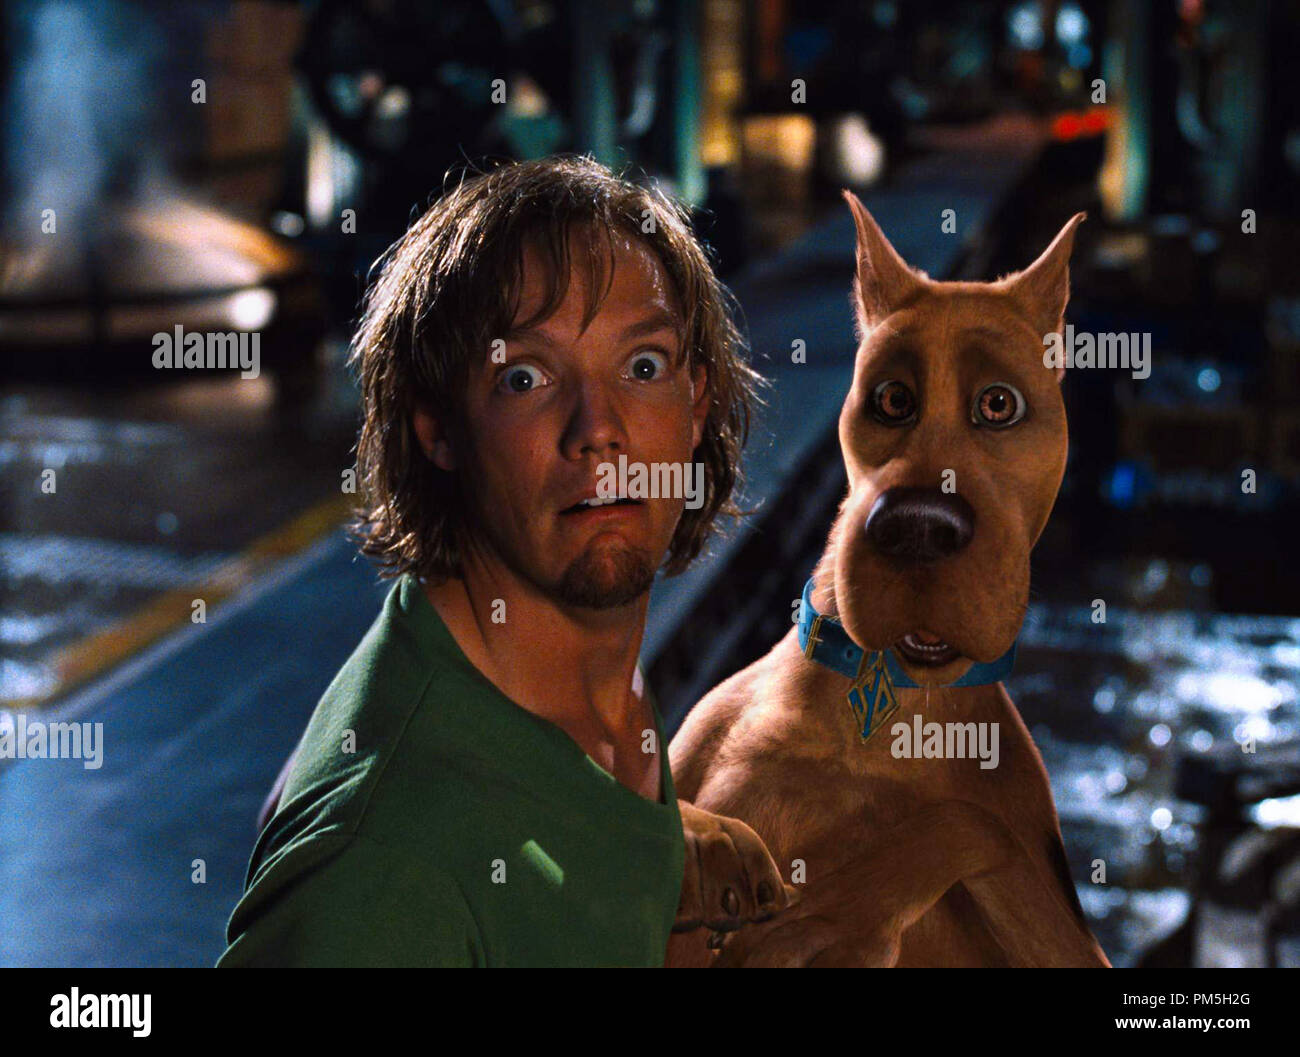 Studio Publicity Still From Scooby Doo Matthew Lillard Scooby Doo 2002 Warner Brothers PM5H2G 